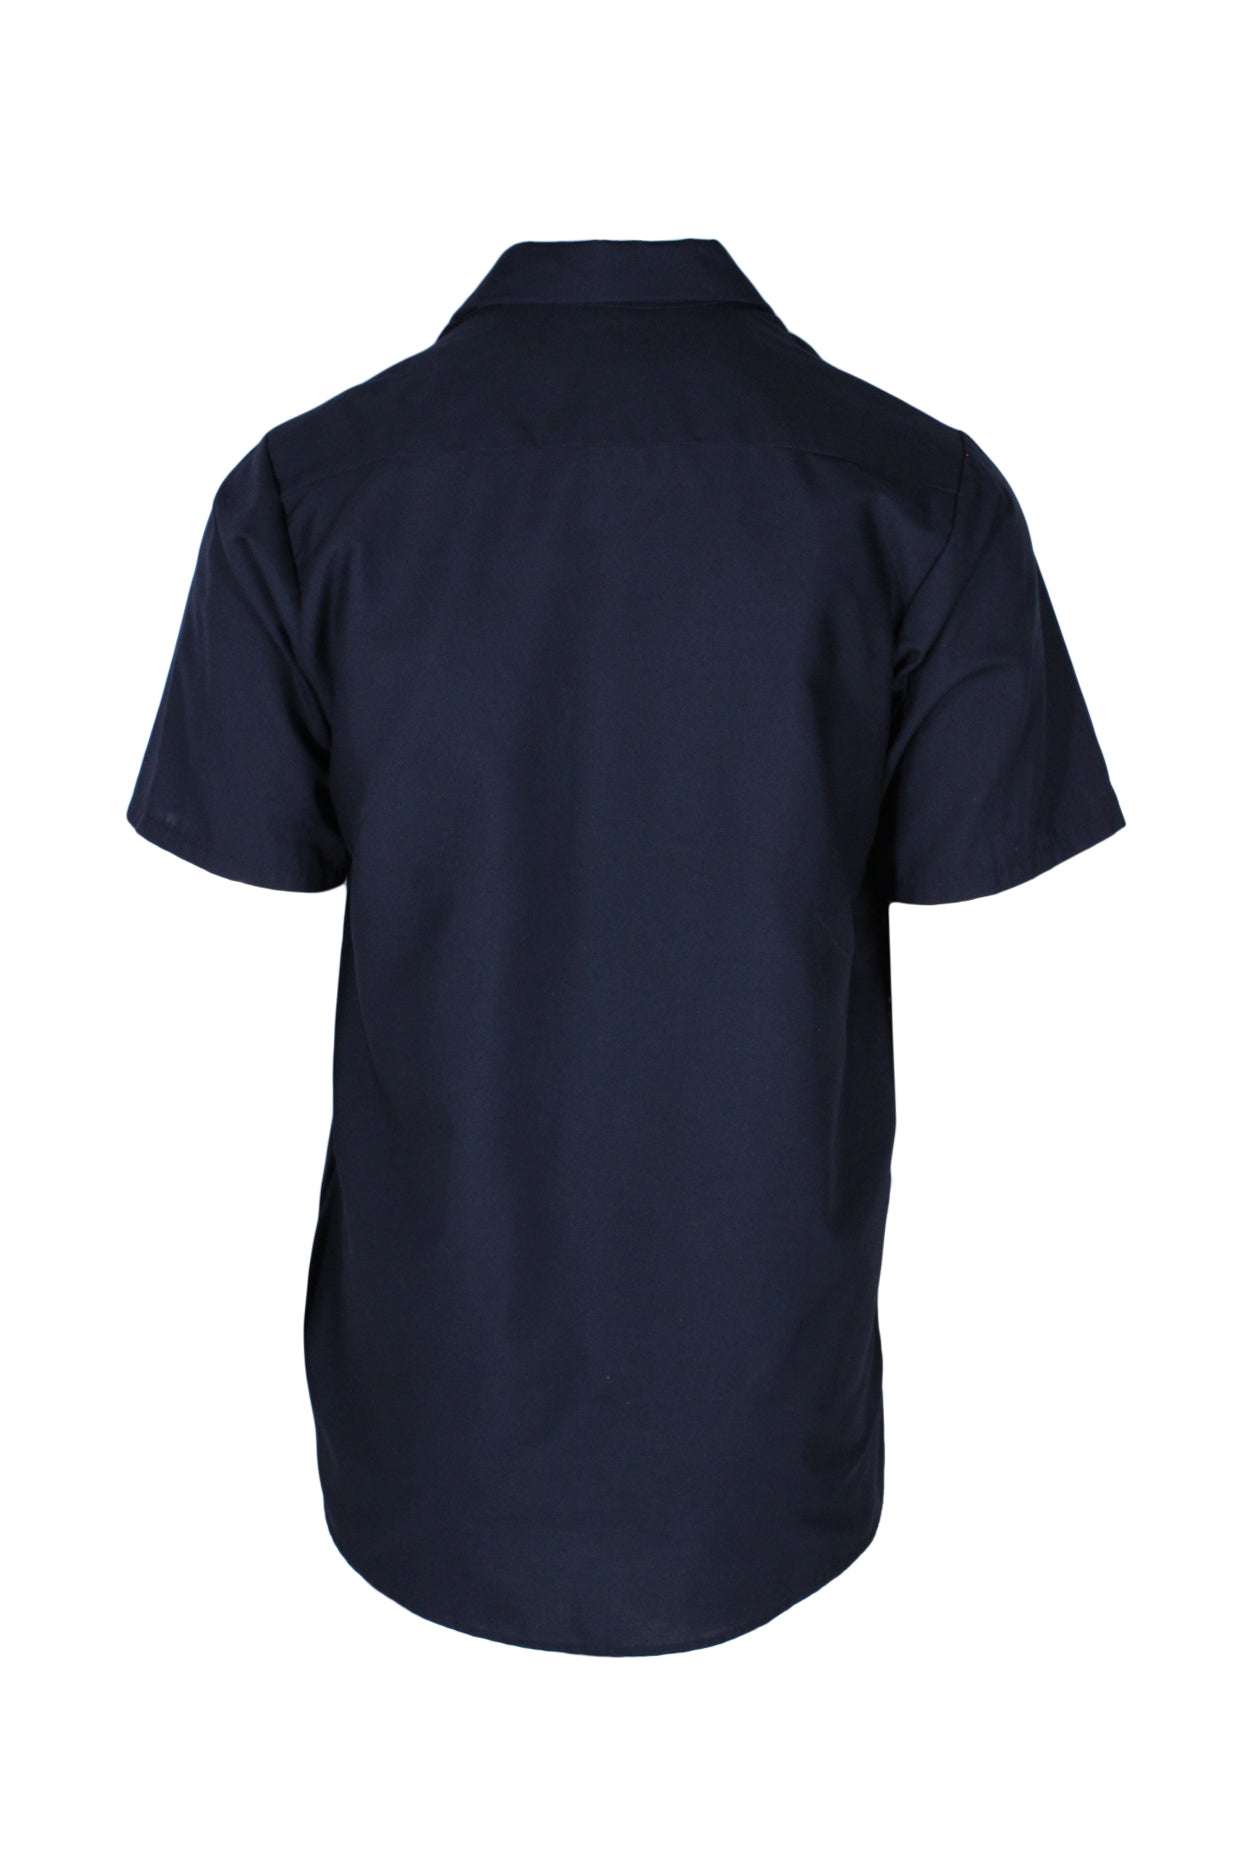 back angle of short sleeve service shirt. 